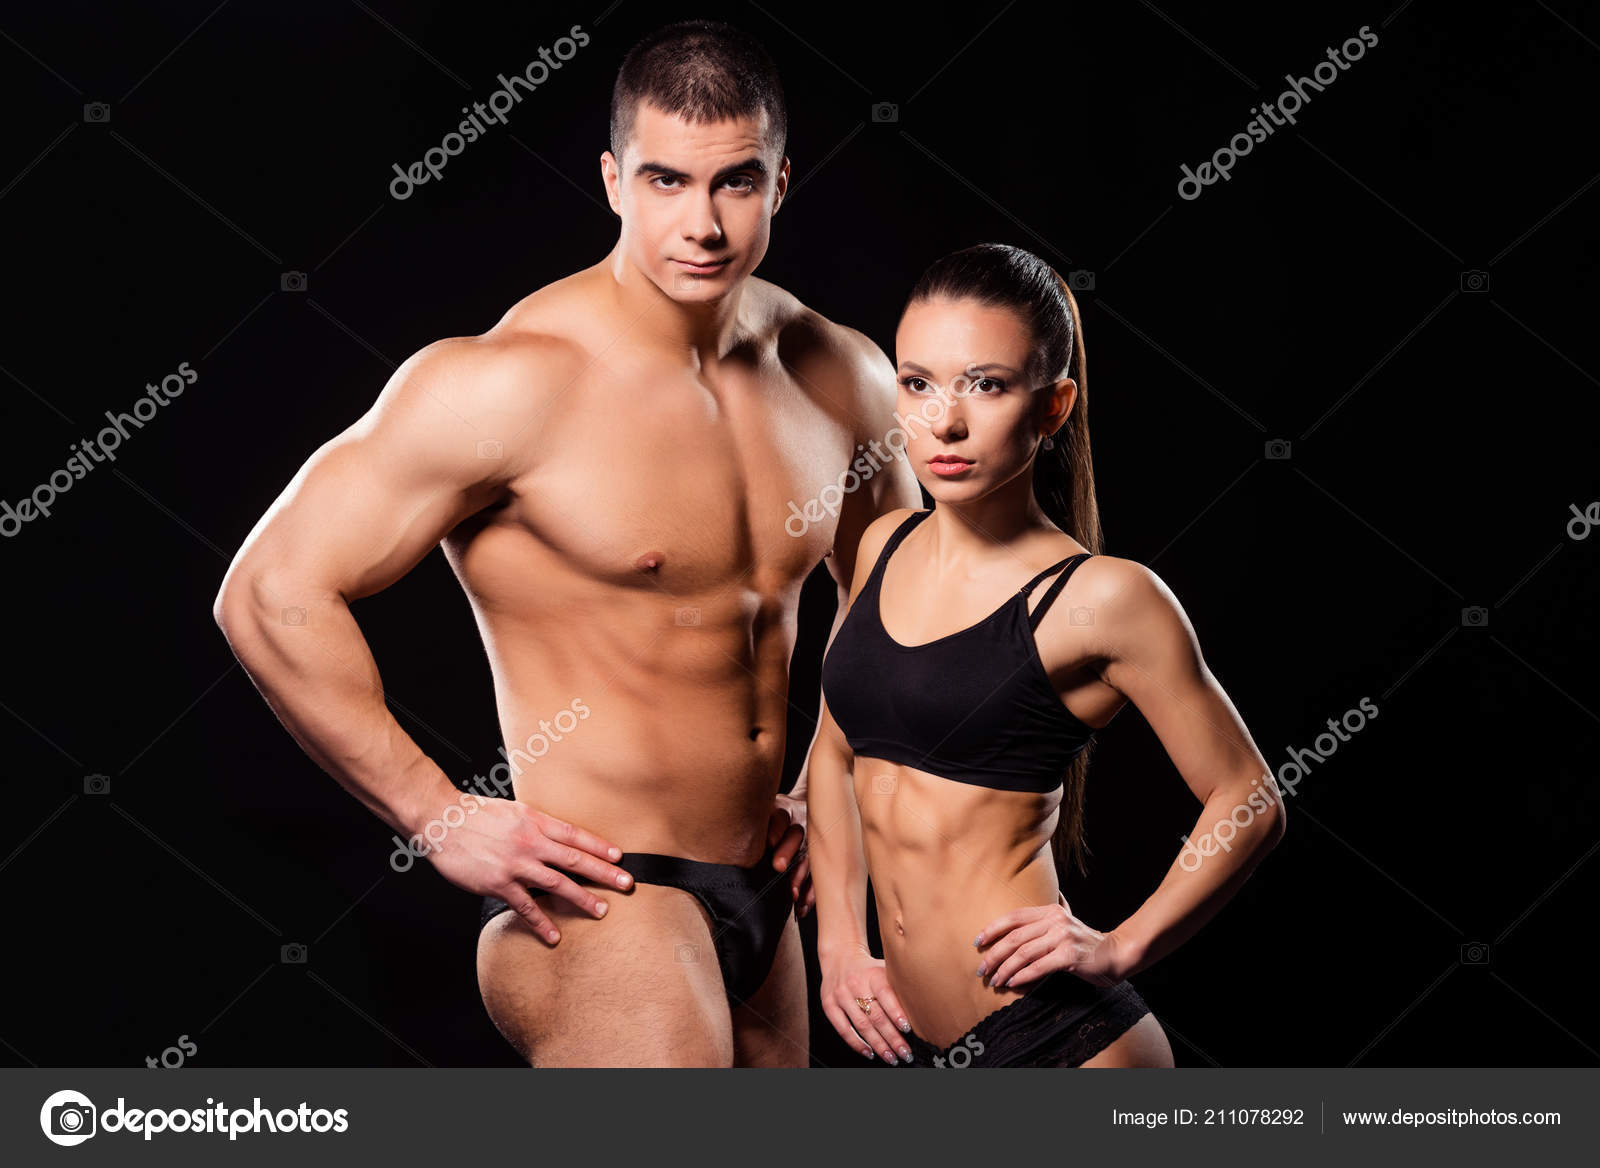 Bodybuilder couple best adult free image